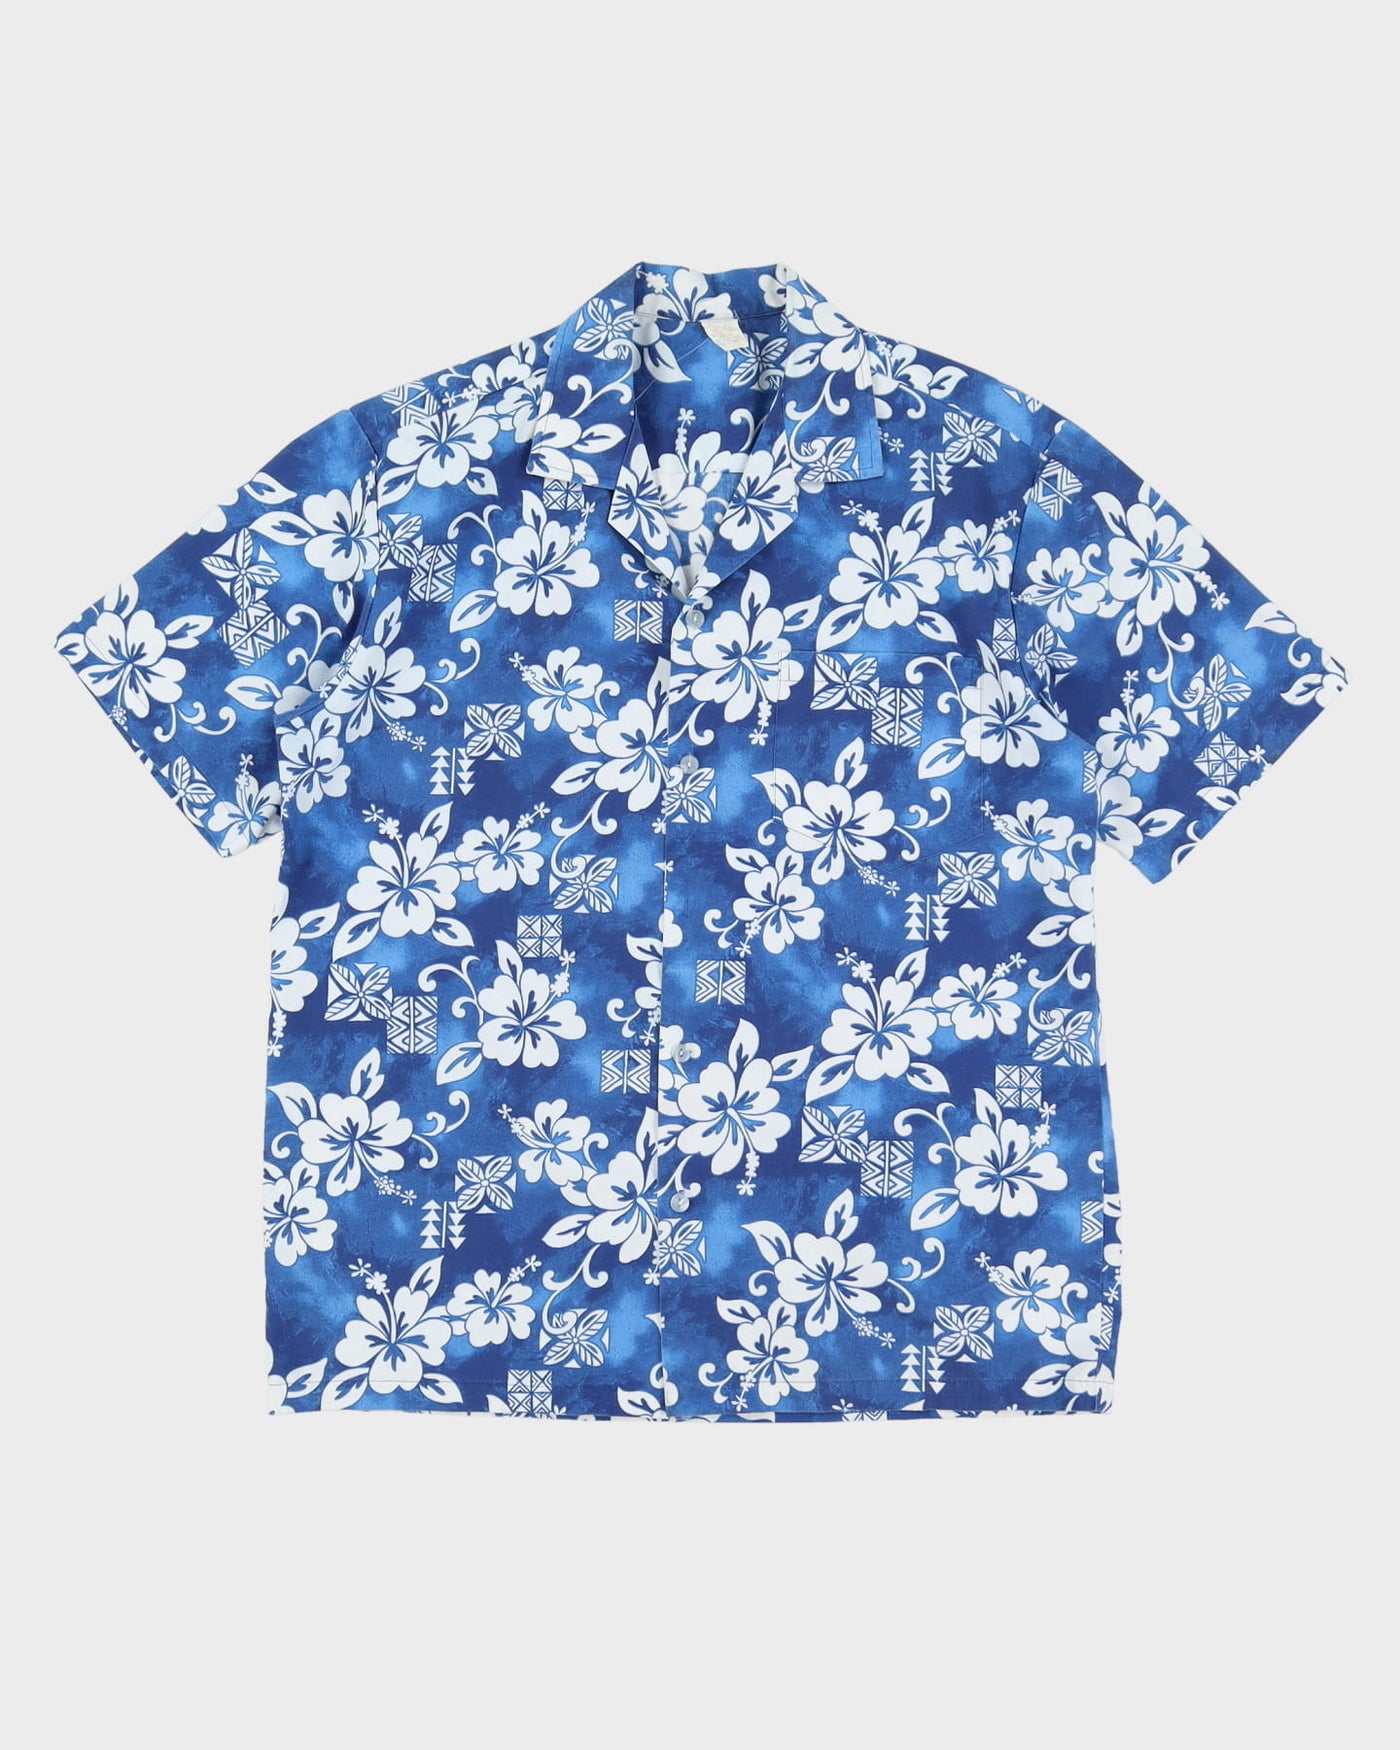 Vintage 1990s Blue Floral Patterned Hawaiian Shirt - XL